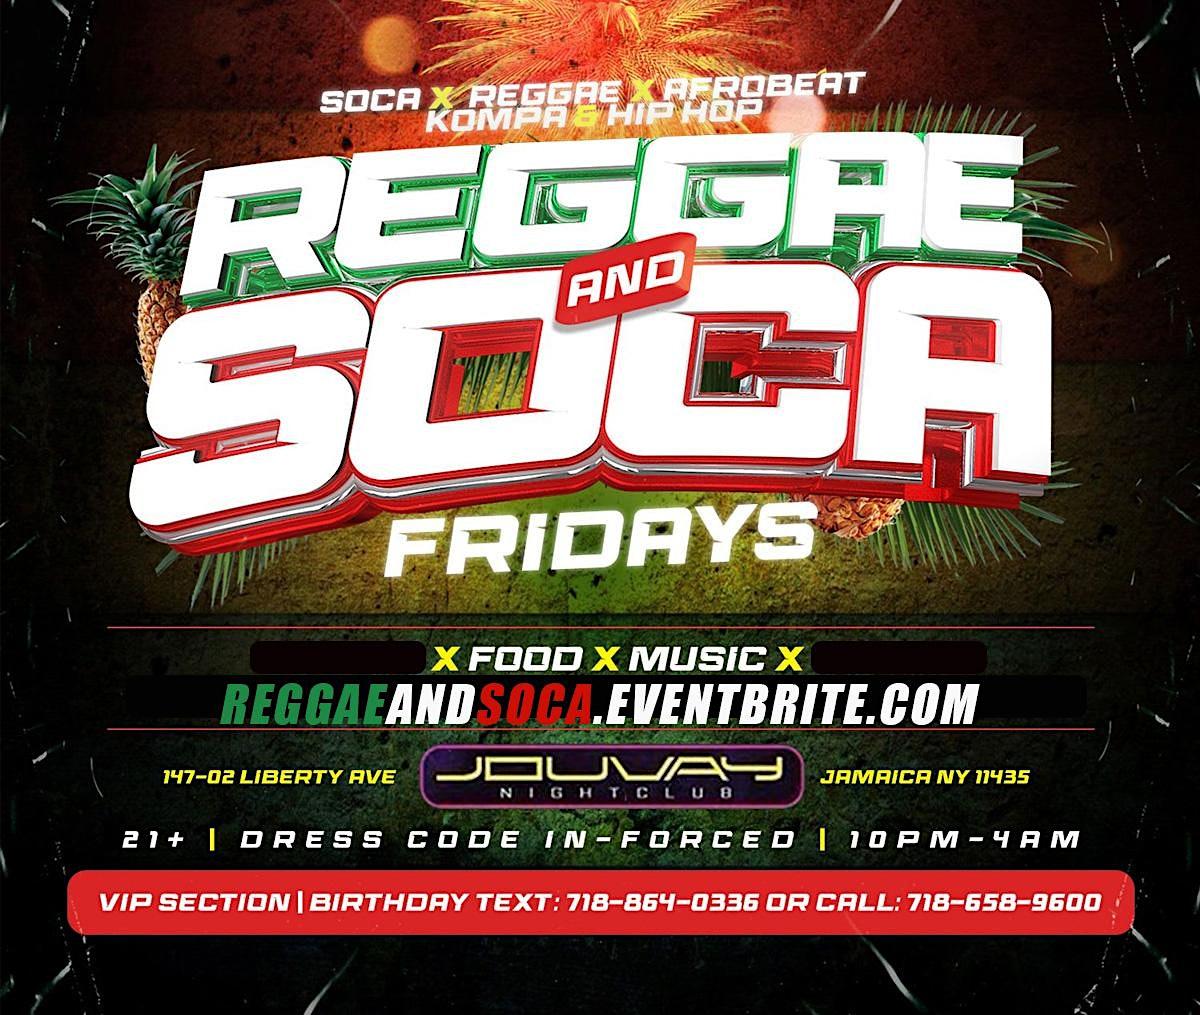 Reggae and Soca Fridays flyer or graphic.